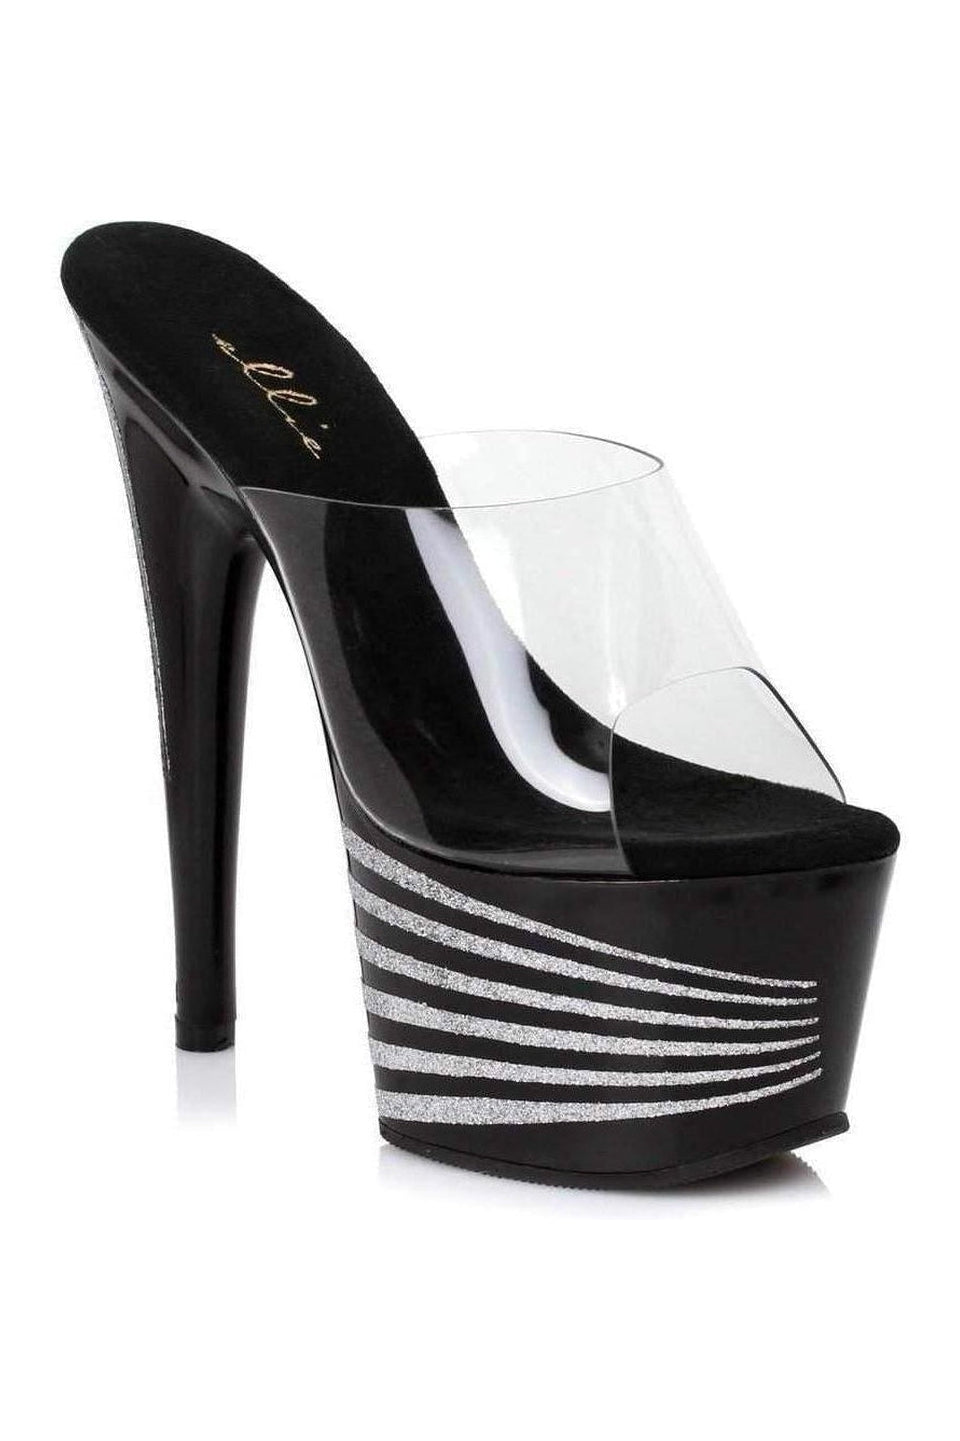 Ellie Shoes Clear Slides Platform Stripper Shoes | Buy at Sexyshoes.com